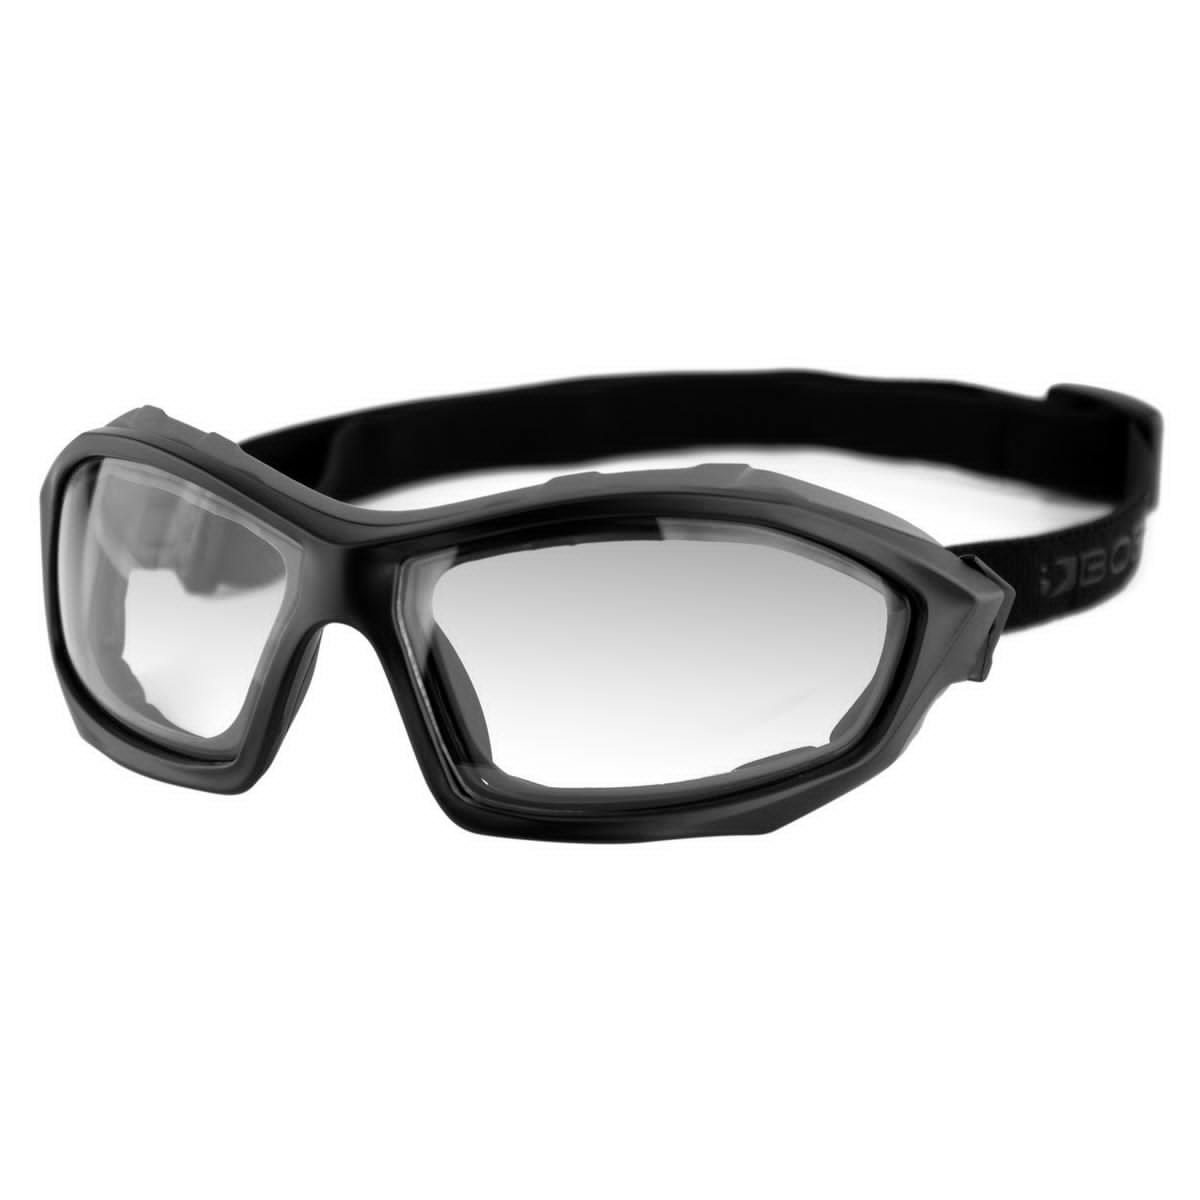 Bobster Dusk Convertible Sunglasses, Polycarbonate, OS, Matte Black Frame, Anti-fog Clear Lenses - American Legend Rider